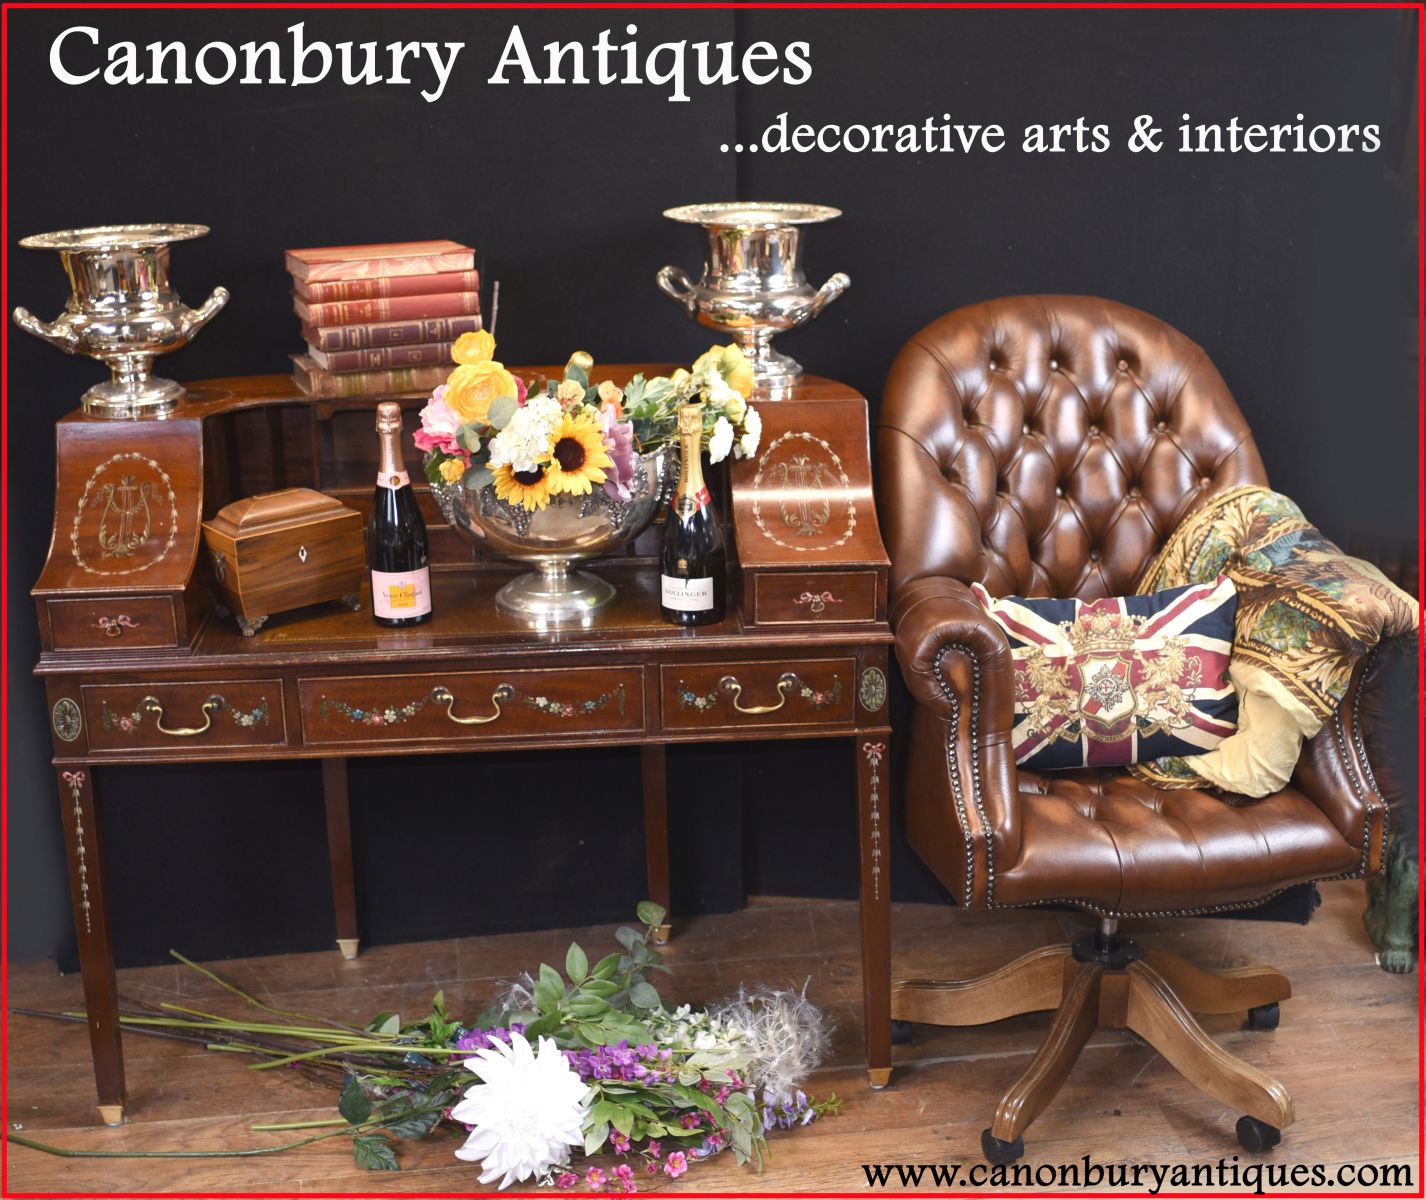 Decorative arts and interiors for Barnet antiques